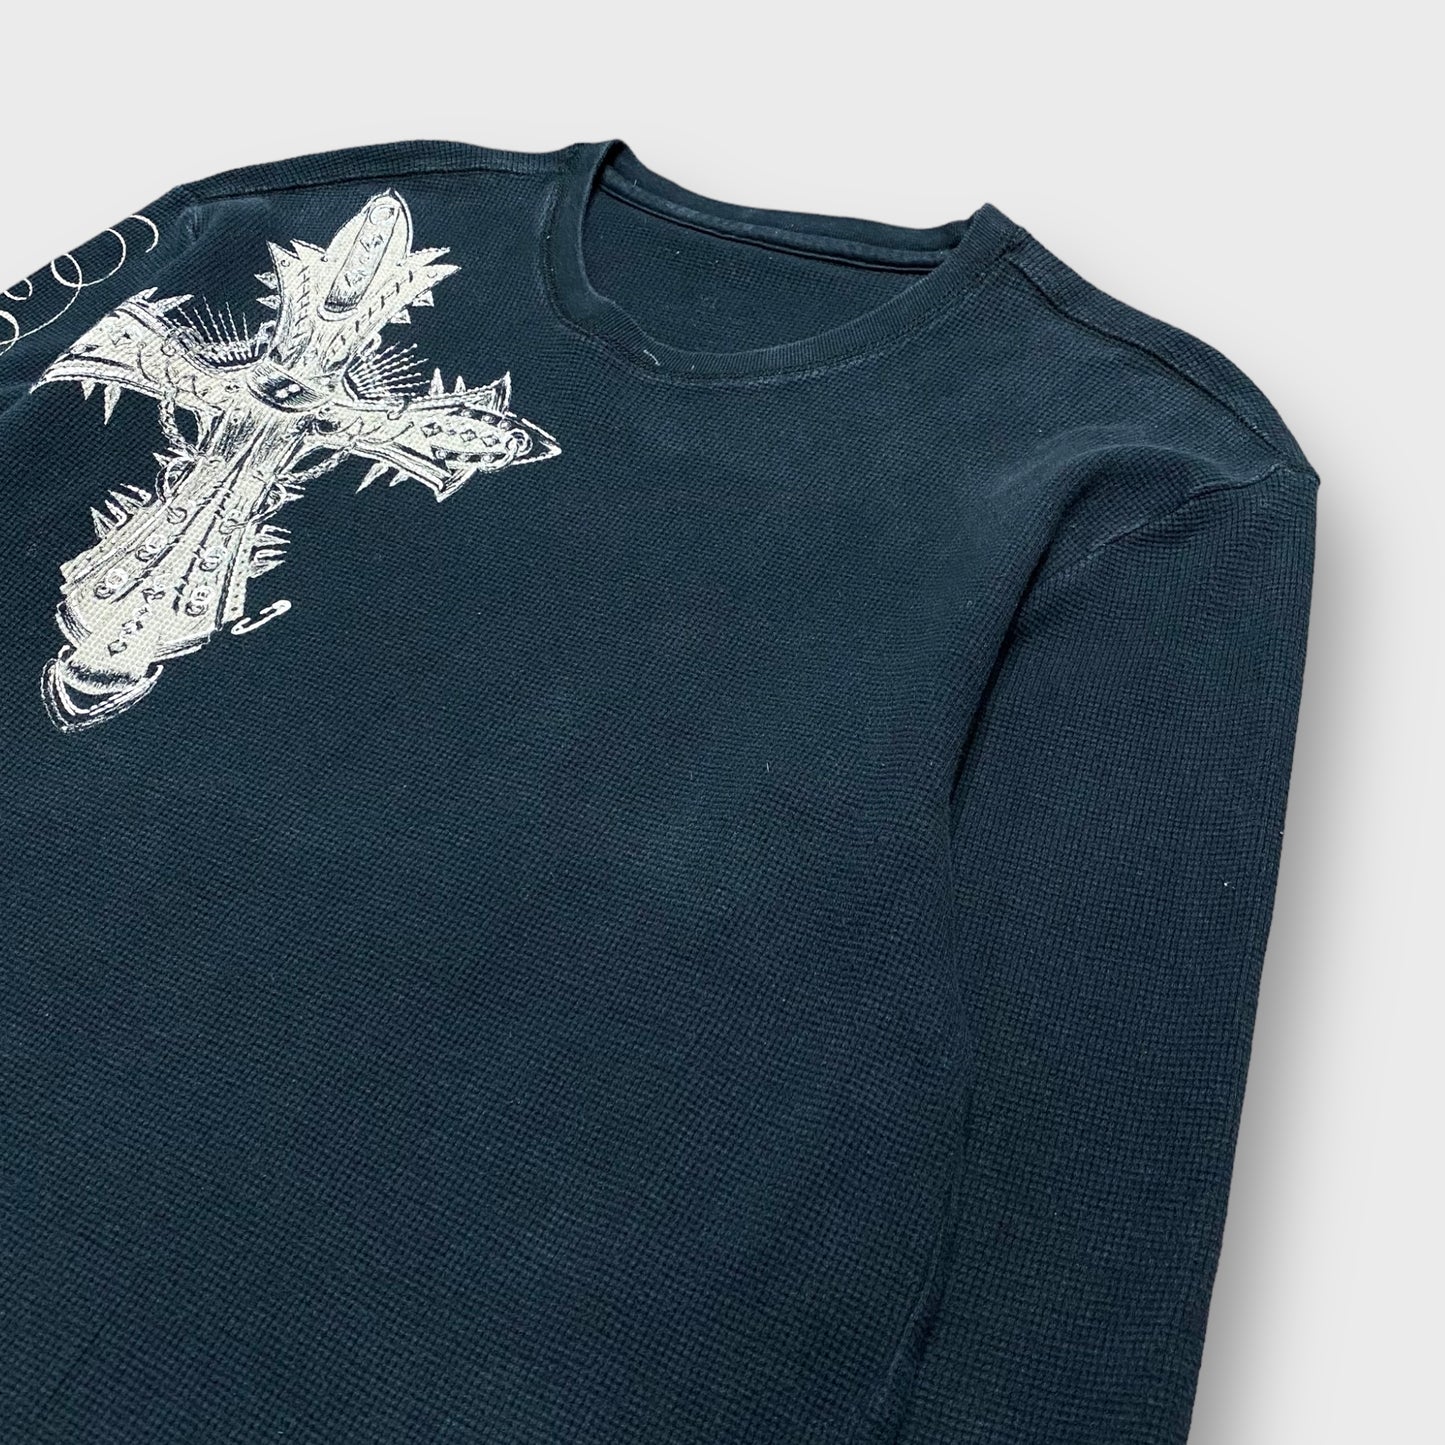 "Marc ecko" Cross design thermal knit sweater